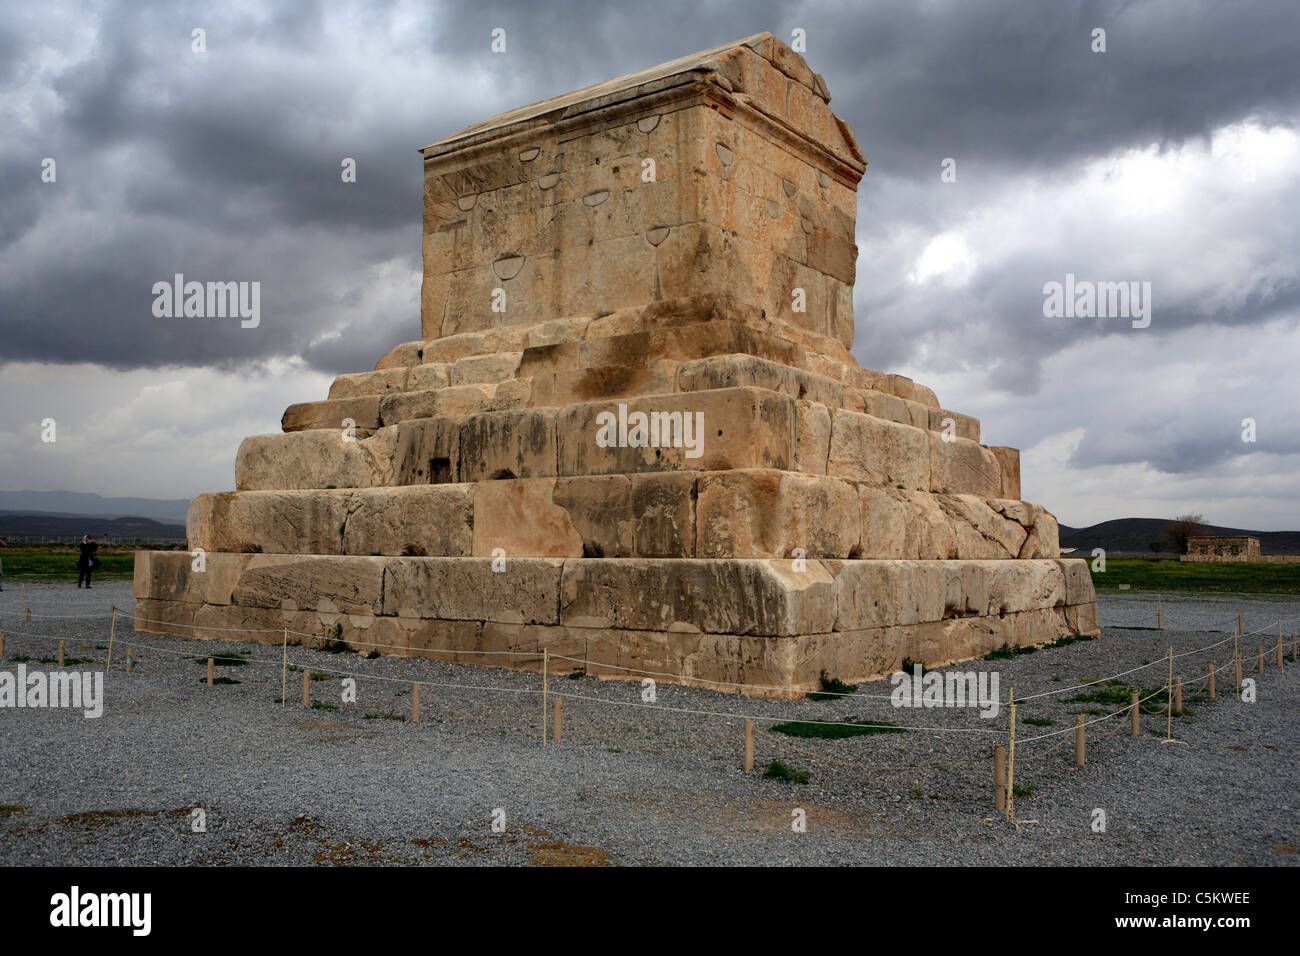 Tumba de Ciro el Grande (siglo VI a.C.), Sitio de Patrimonio Mundial de la UNESCO, Pasargadae, provincia de Fars, Irán Foto de stock